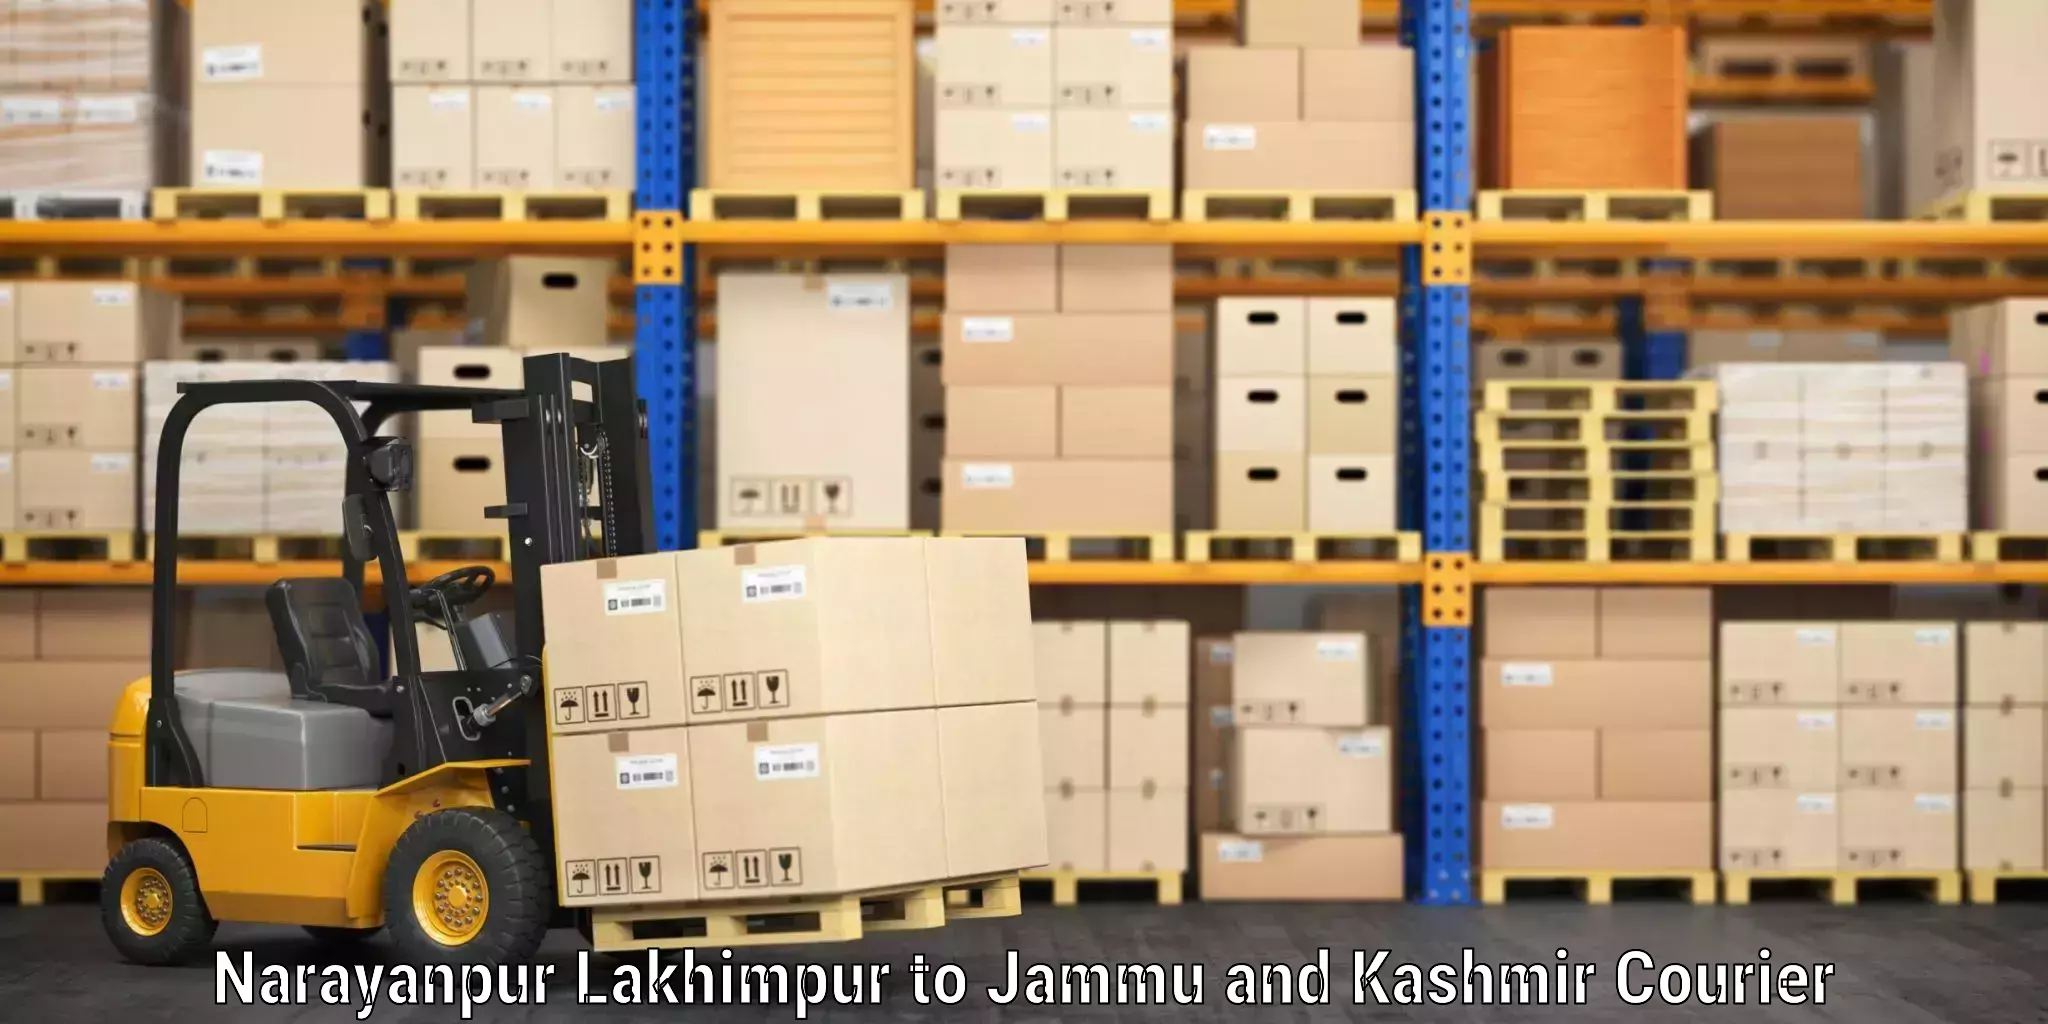 Multi-destination luggage transport in Narayanpur Lakhimpur to Jammu and Kashmir